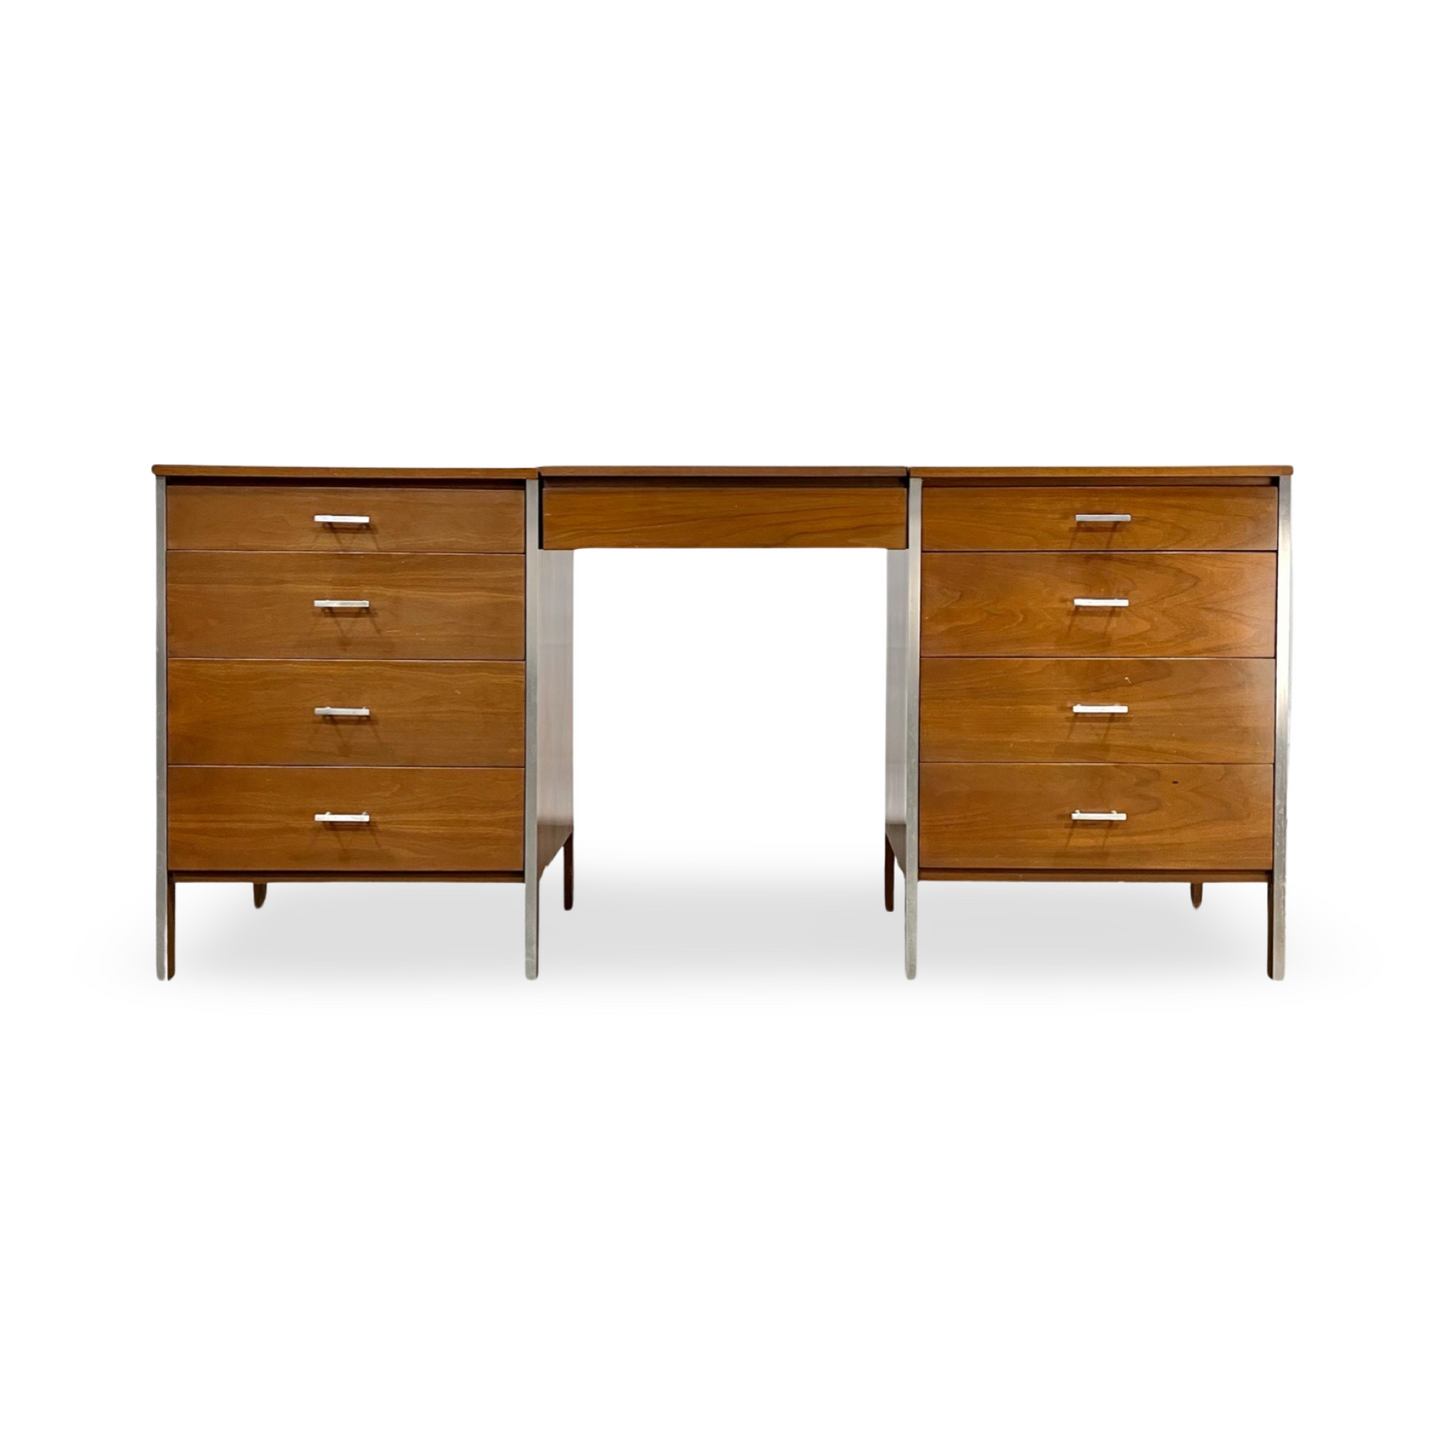 Paul Mccobb for Calvin Linear 3 Piece Mid Century Modern Vanity Dresser Set c. 1960s